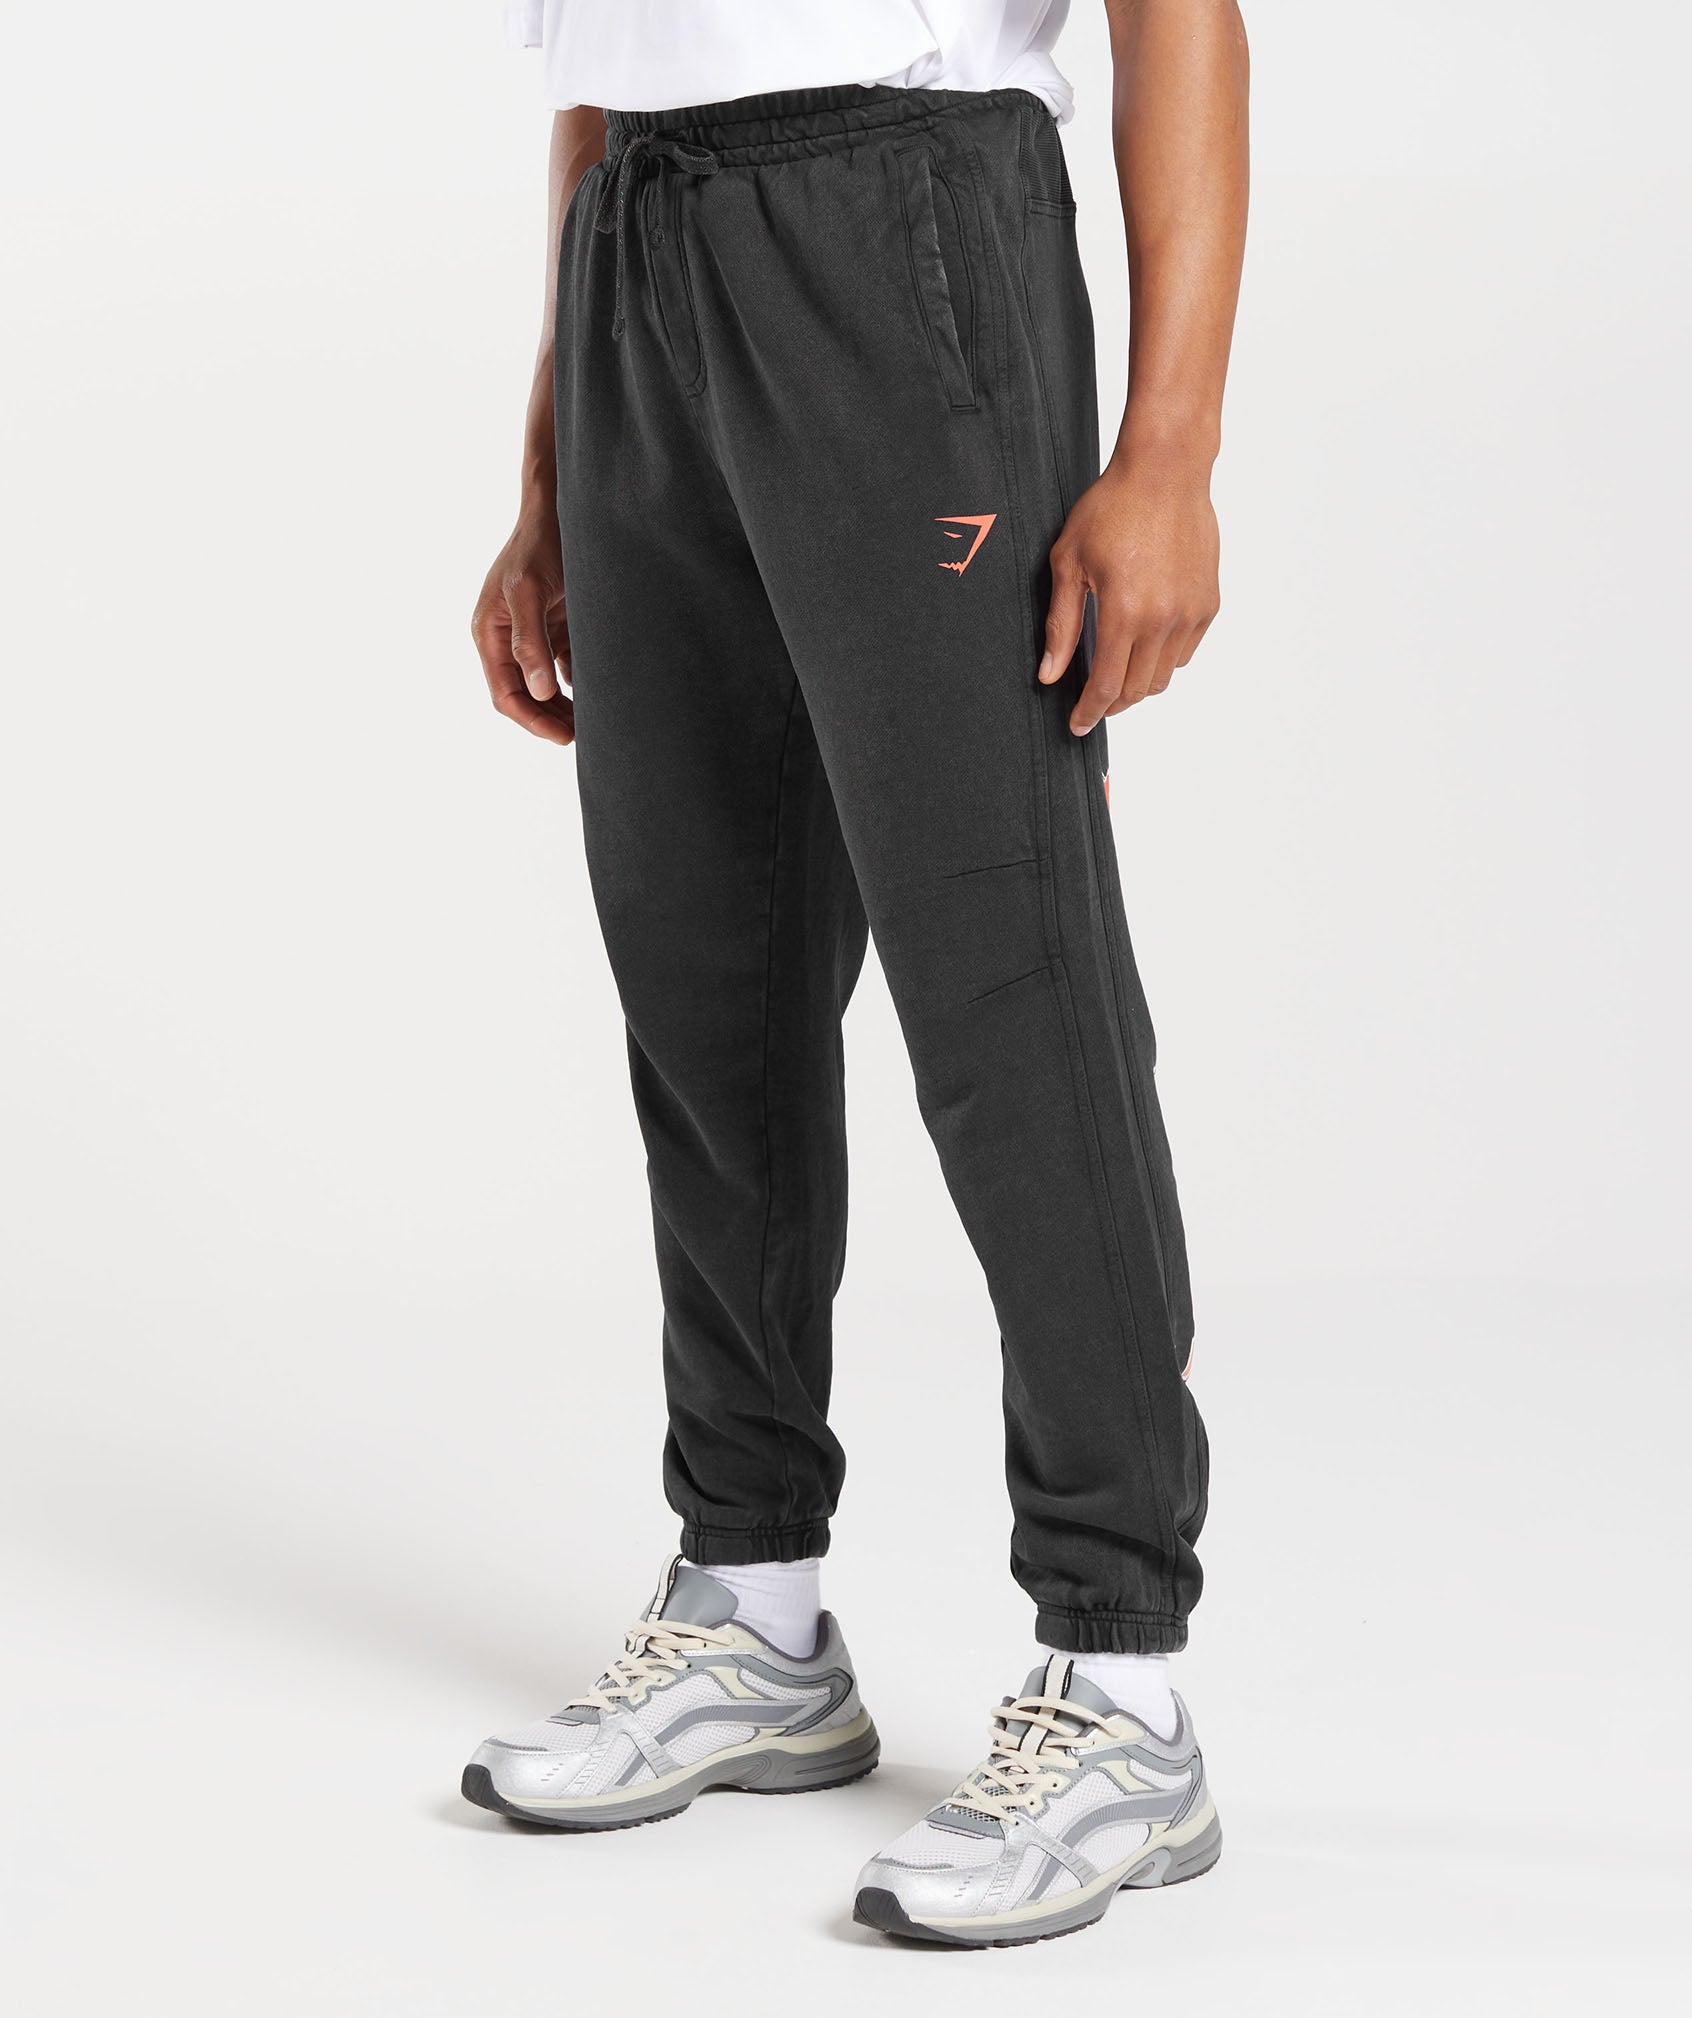 Gymshark Joggers Womens M Black High Rise Drawstring Zipper Pockets Sweat  Pants | eBay